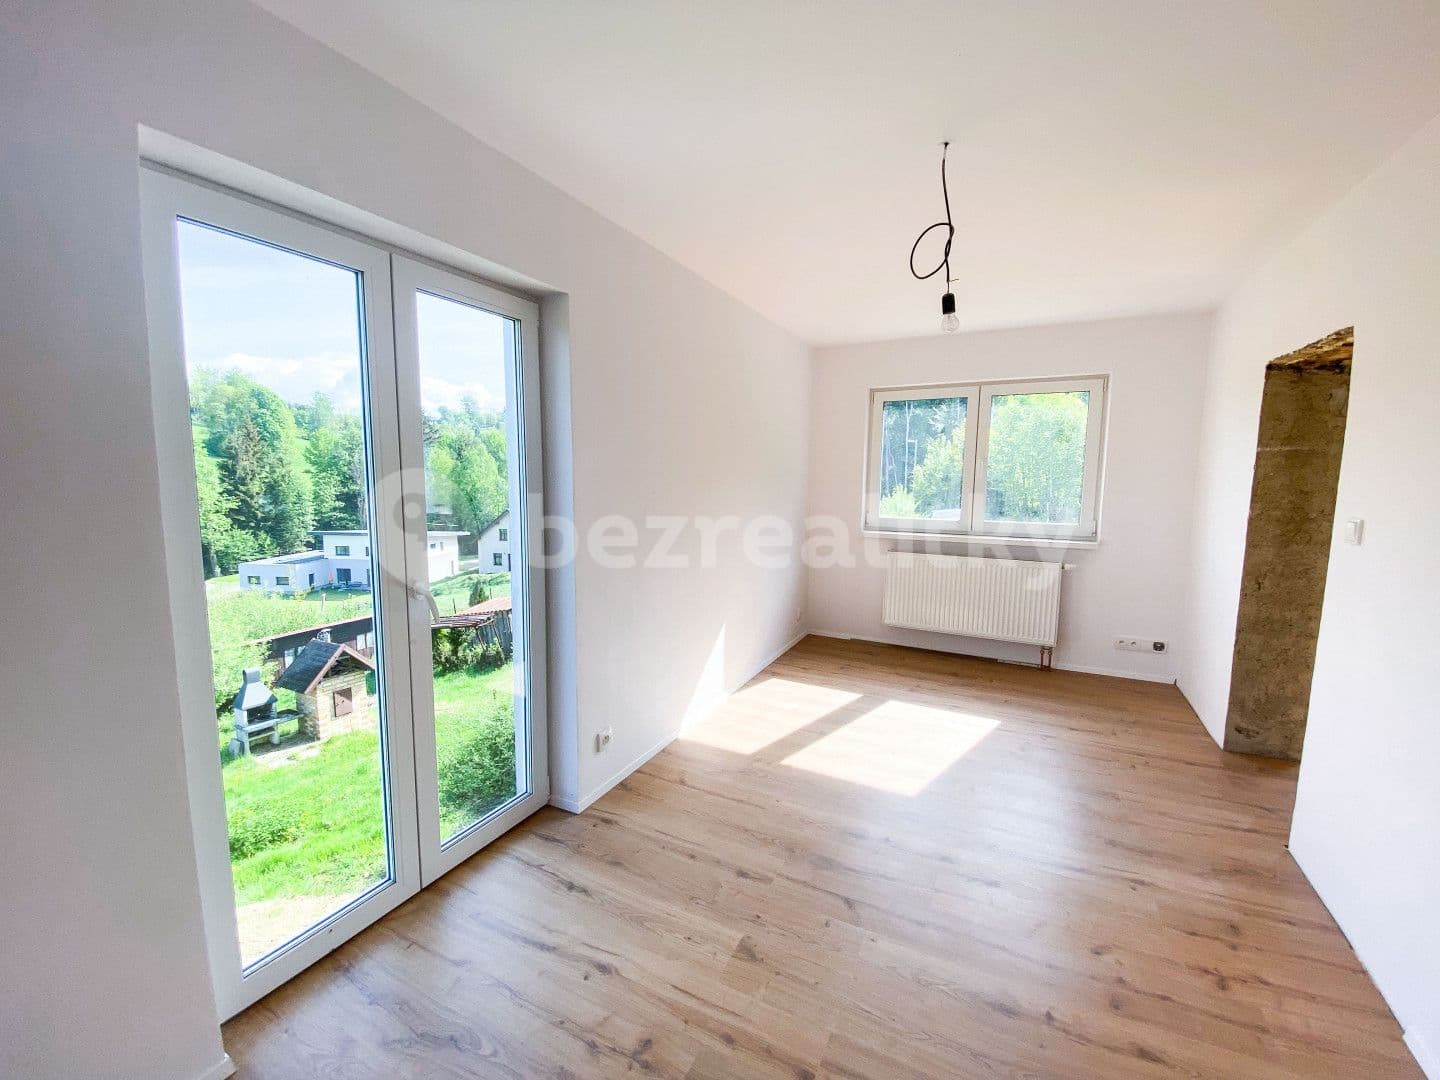 Predaj bytu 3-izbový 61 m², U Staré lípy, Jablonec nad Nisou, Liberecký kraj